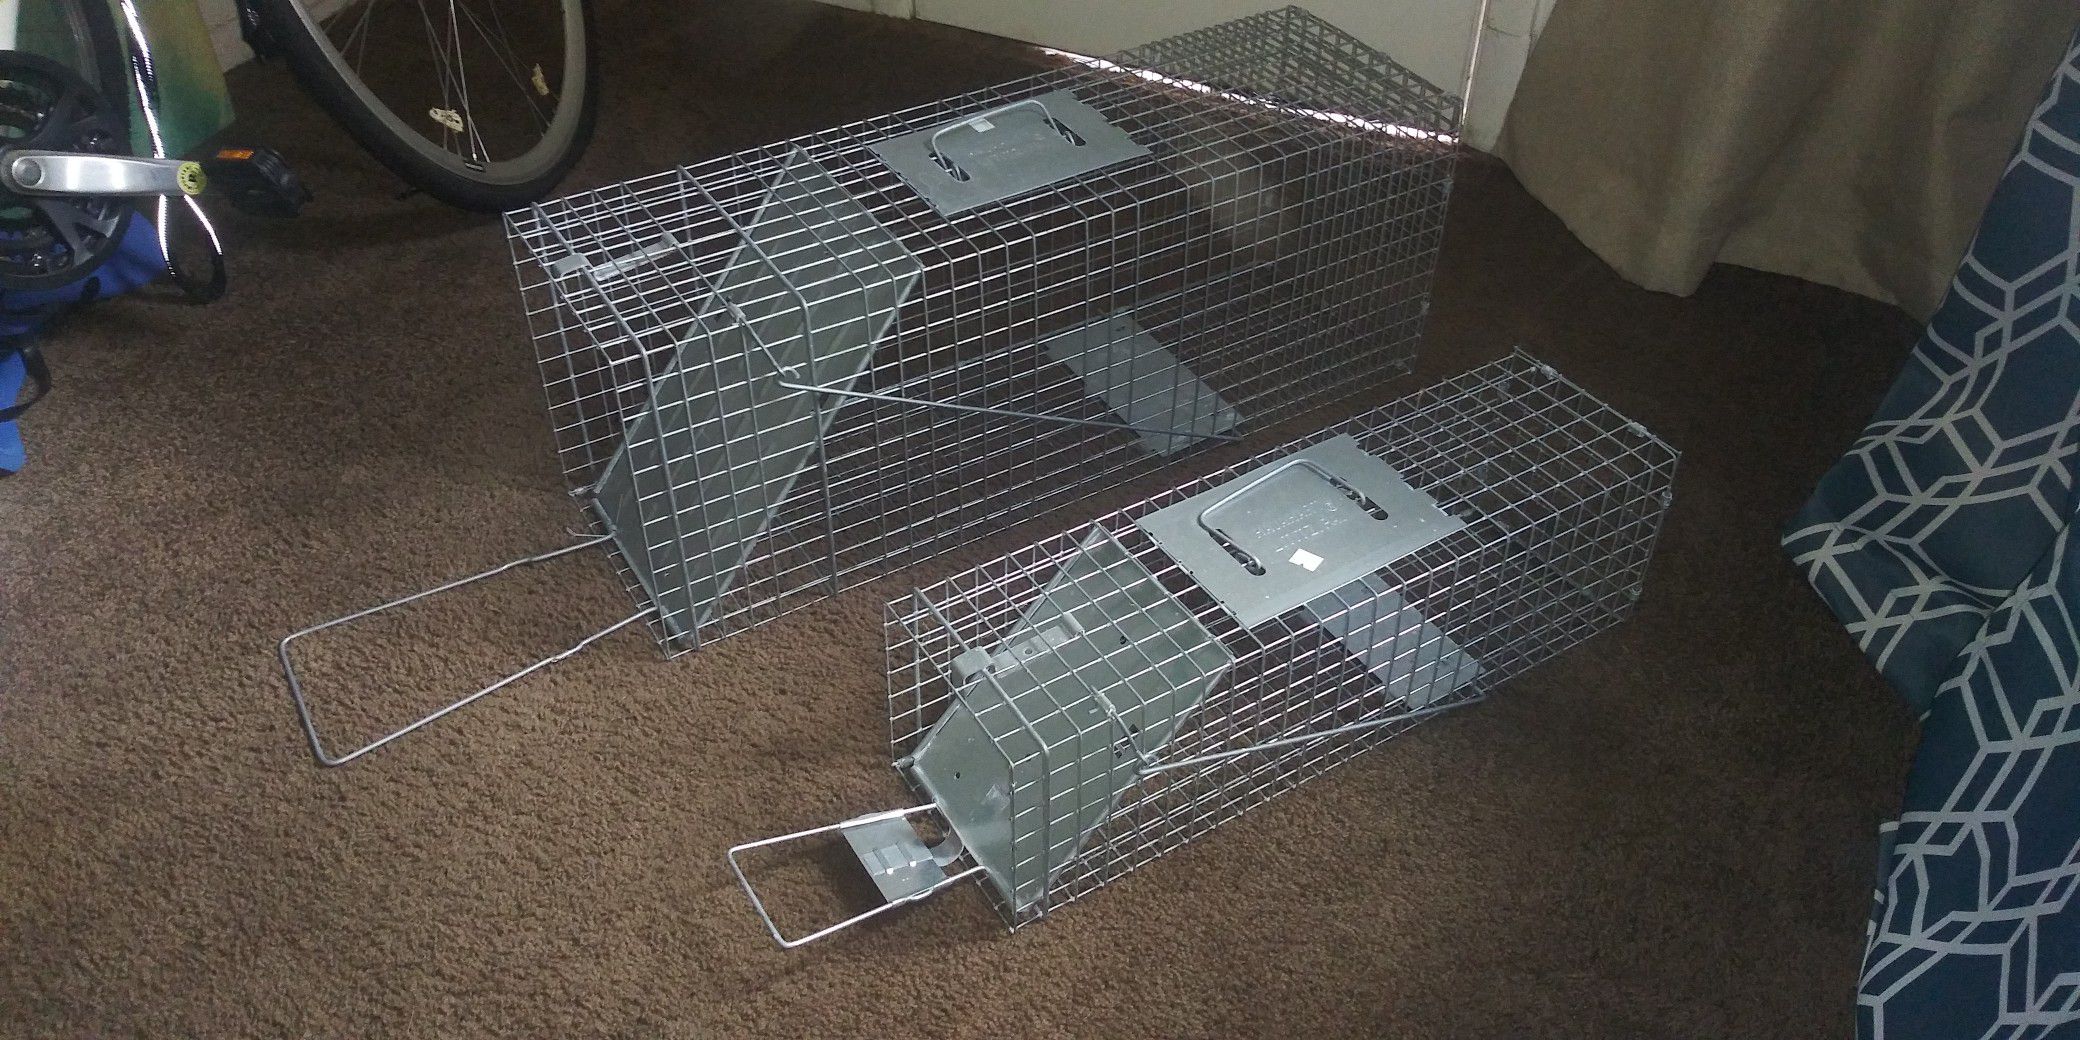 Small animal traps